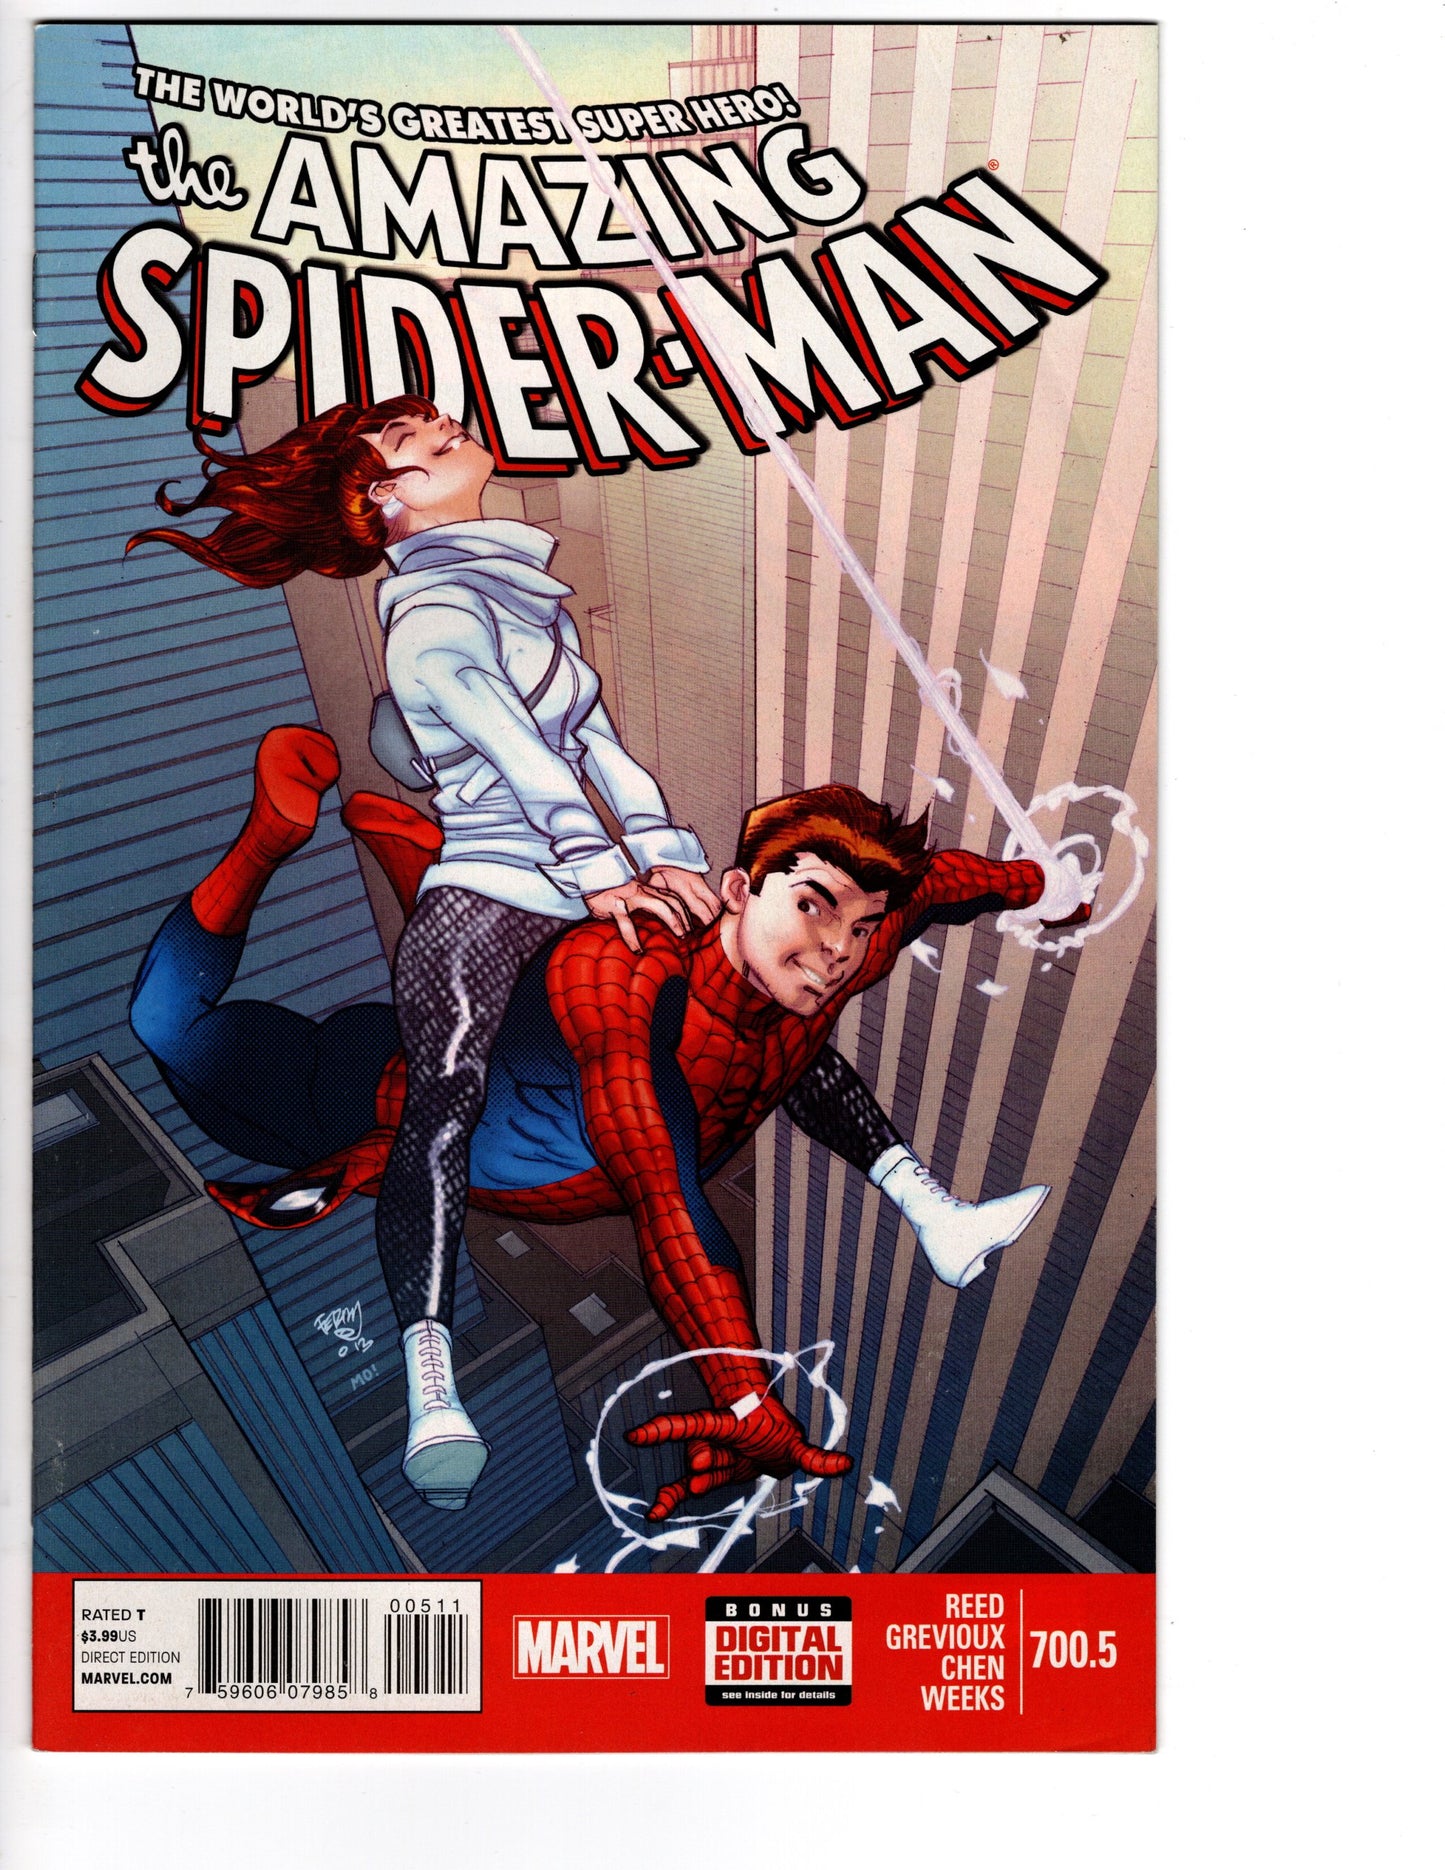 The Amazing Spider-Man #700.5